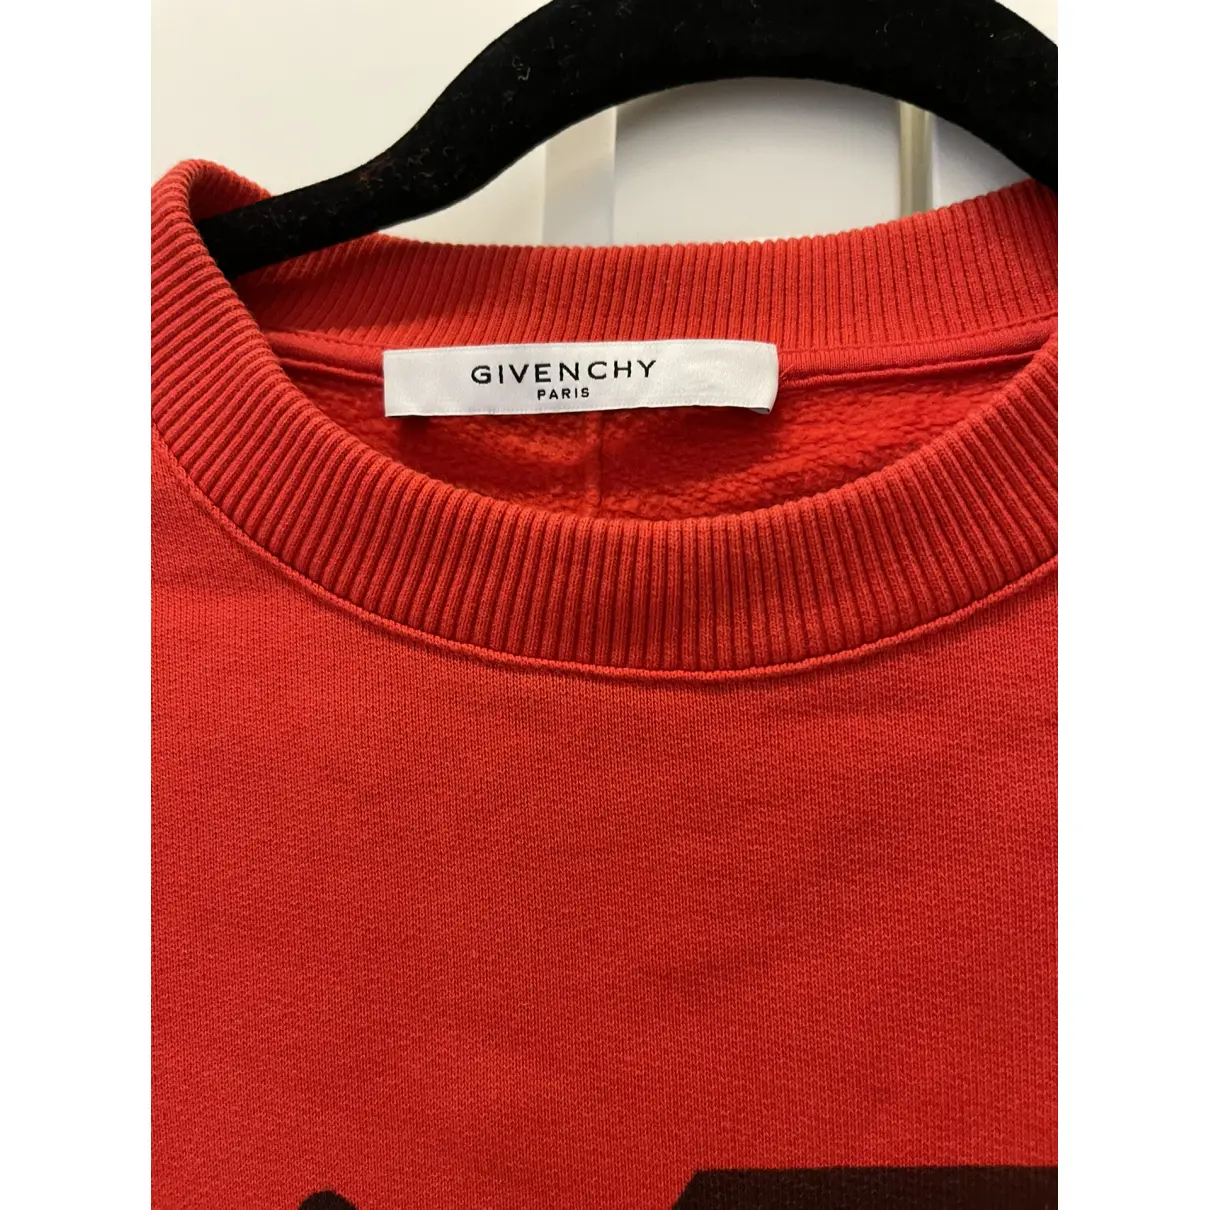 Buy Givenchy Sweatshirt online